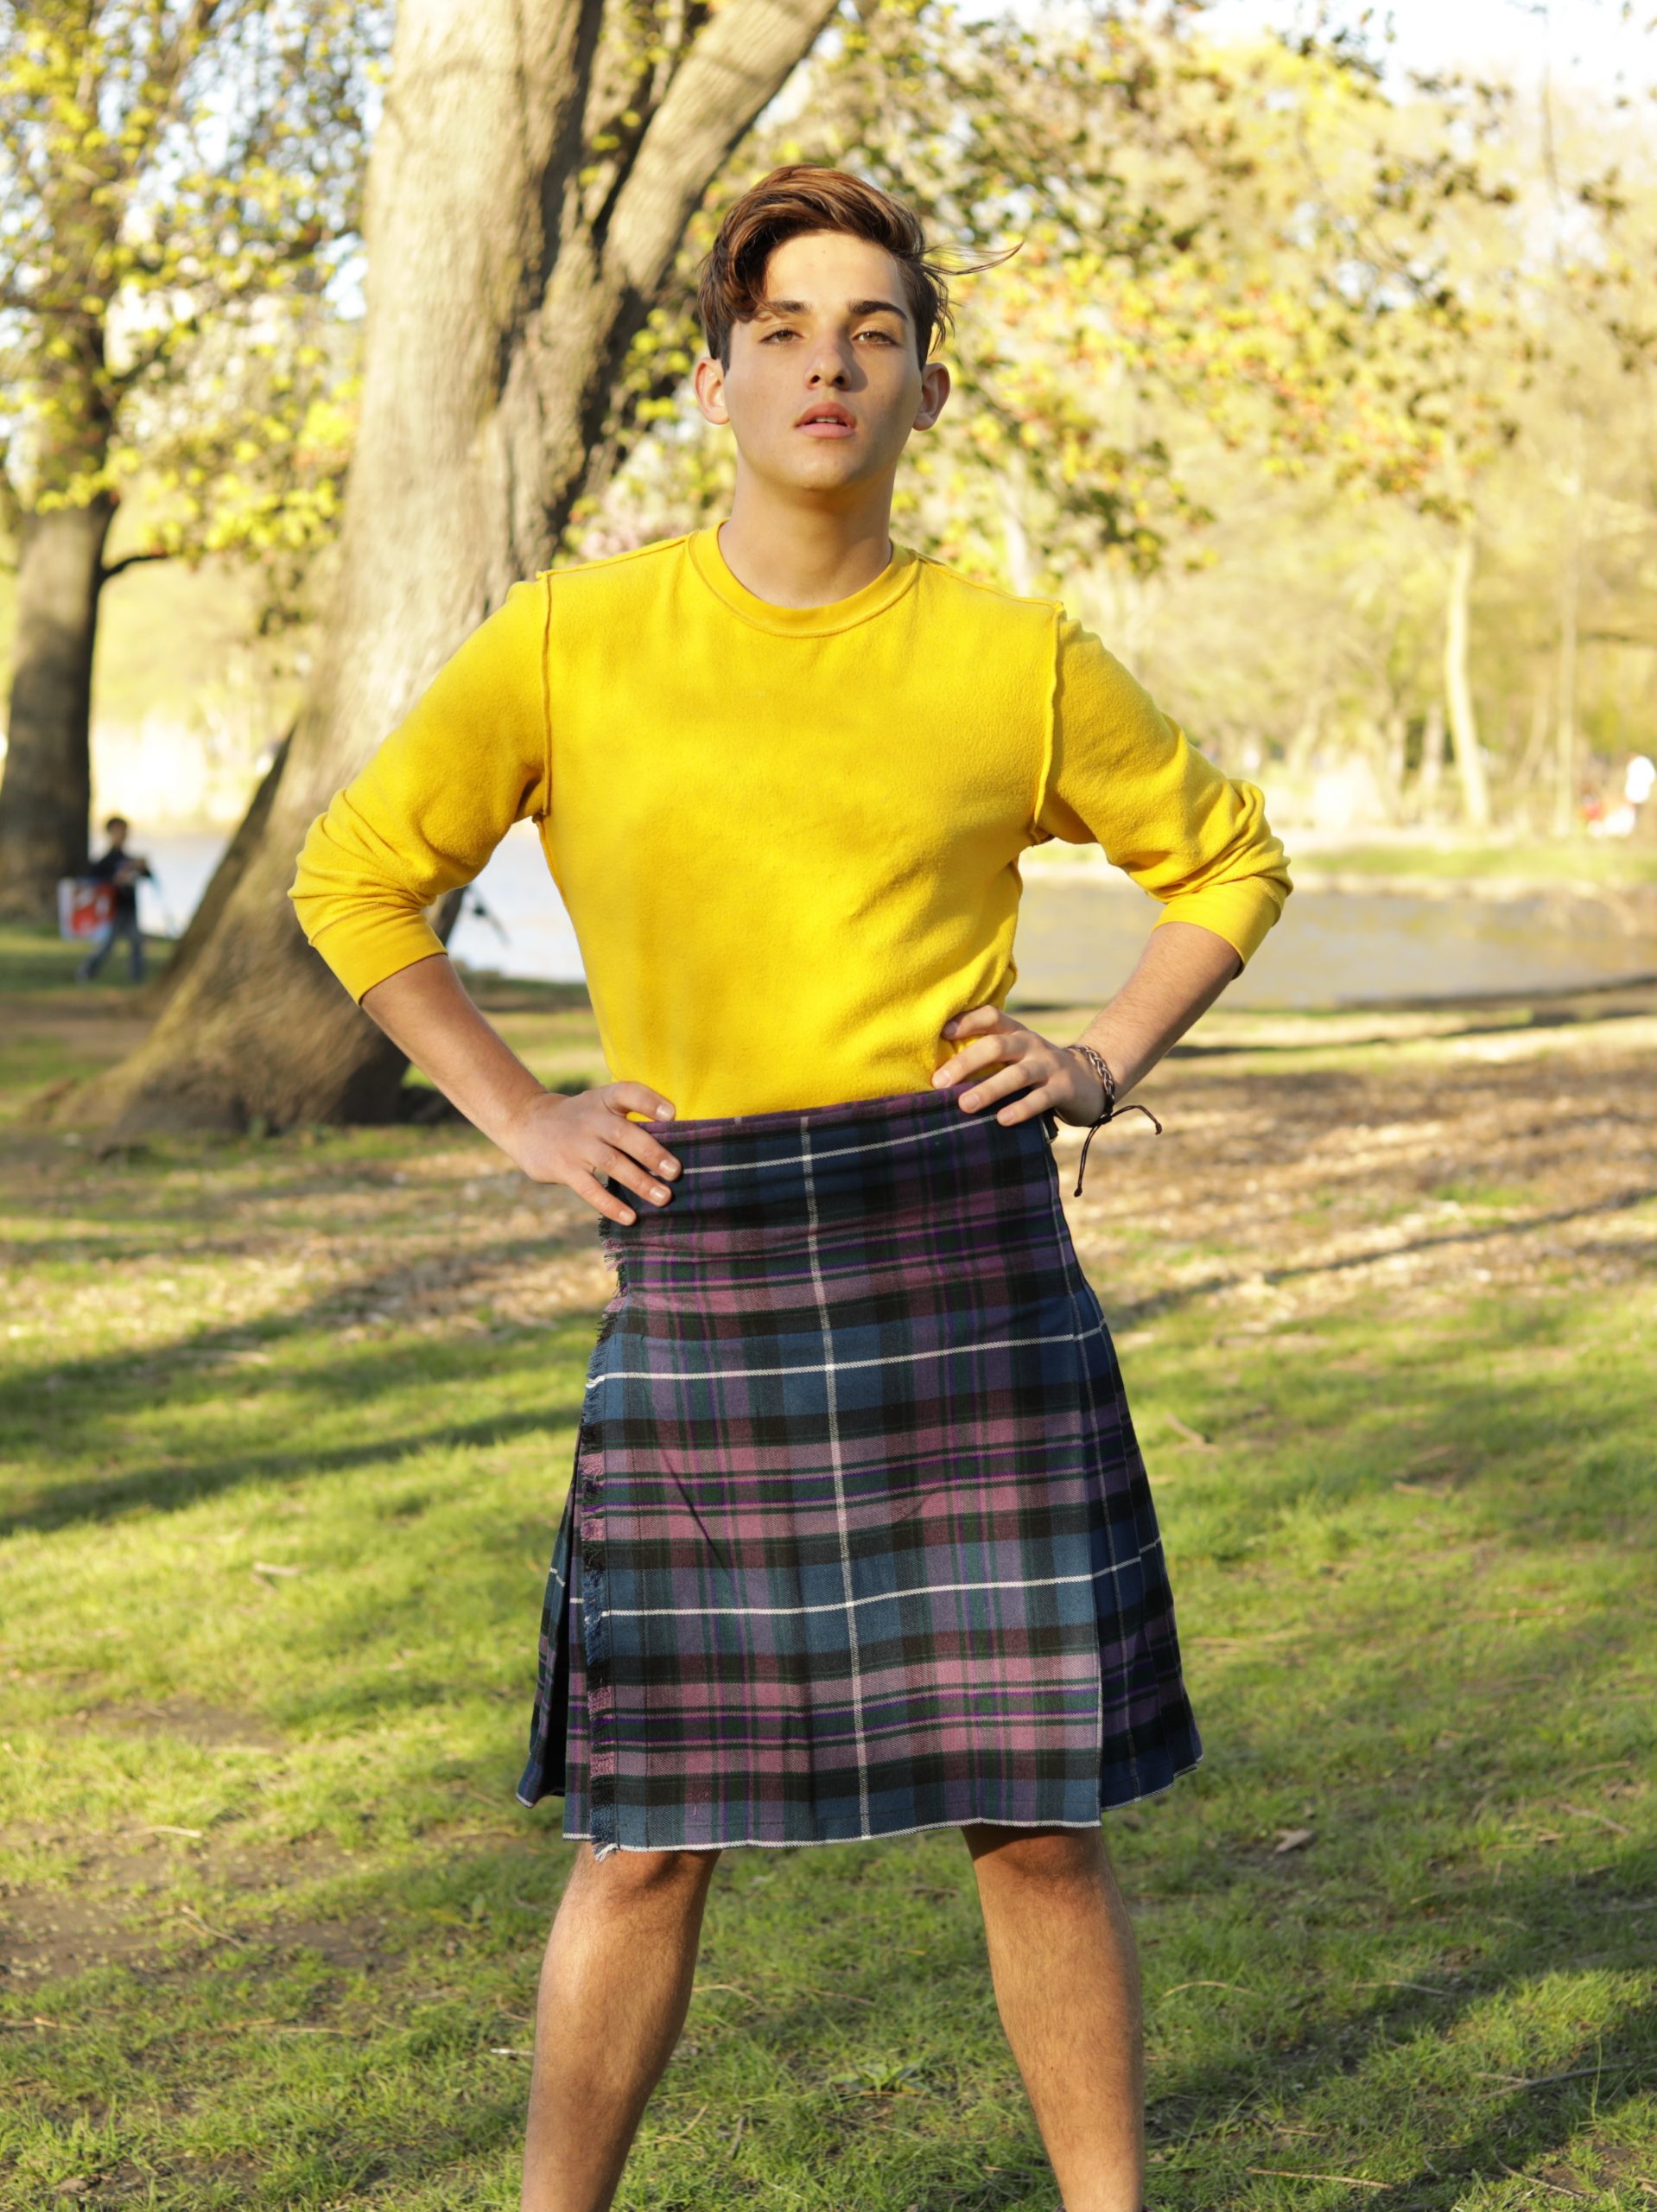 Details about   Scottish Traditional Tartan Kilt Pride of Scotland 8 Yard European Men's Outfit 